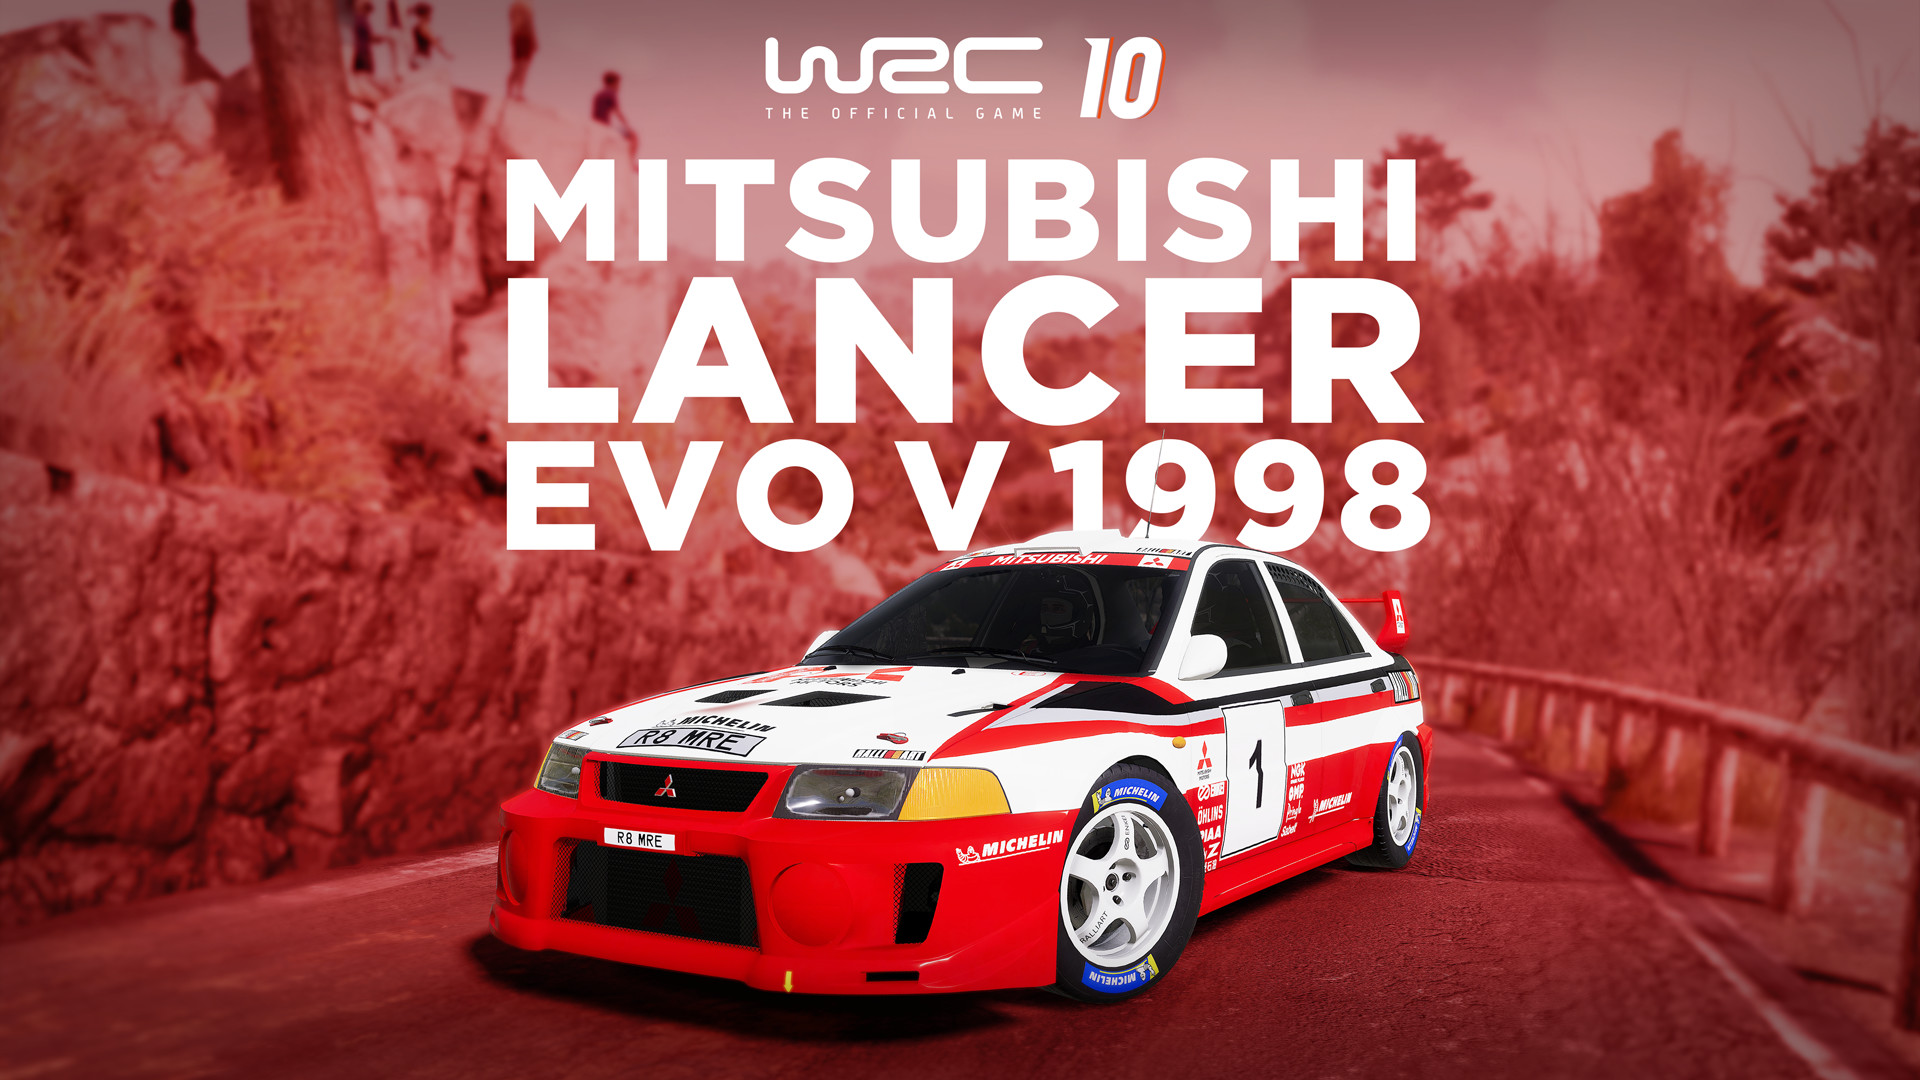 WRC 10 - Mitsubishi Lancer Evo V 1998 DLC Steam CD Key, 2.69$